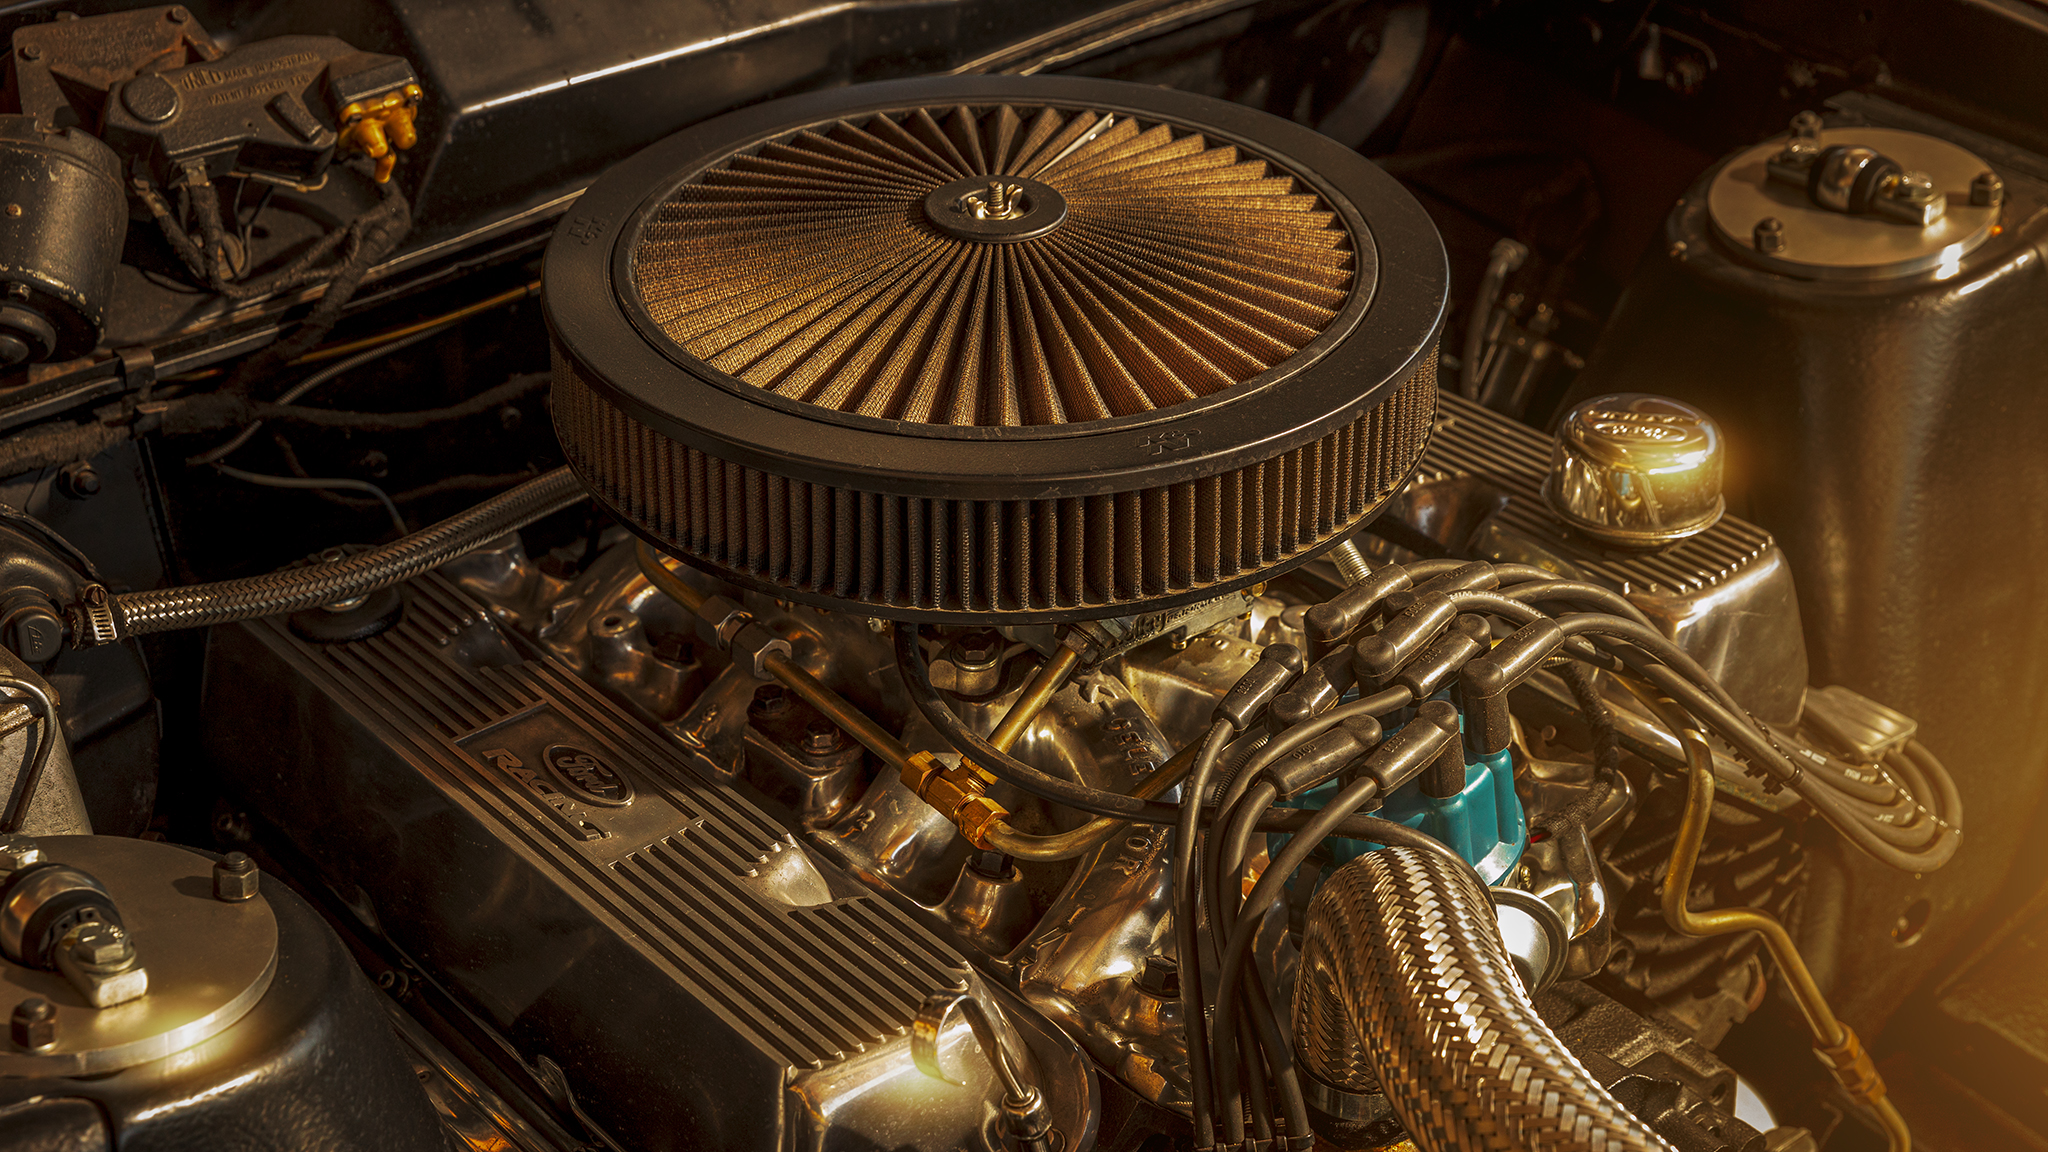 General 2048x1152 Norbert Schüller engine gold warm car wires golden hour gears Ford